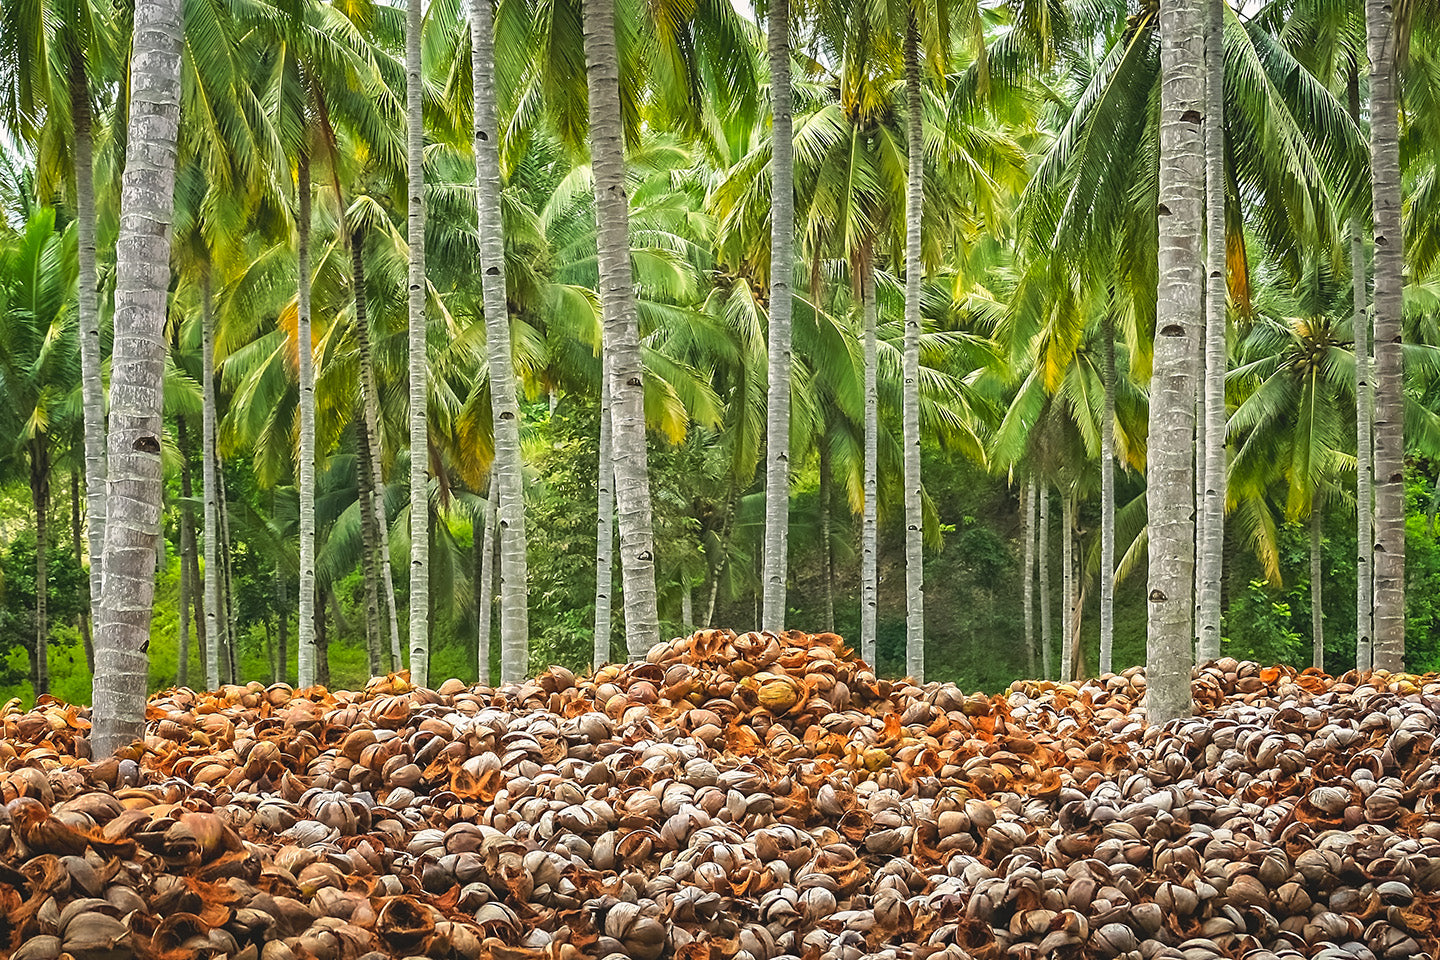 Recycling coconut palm waste like coconut husk